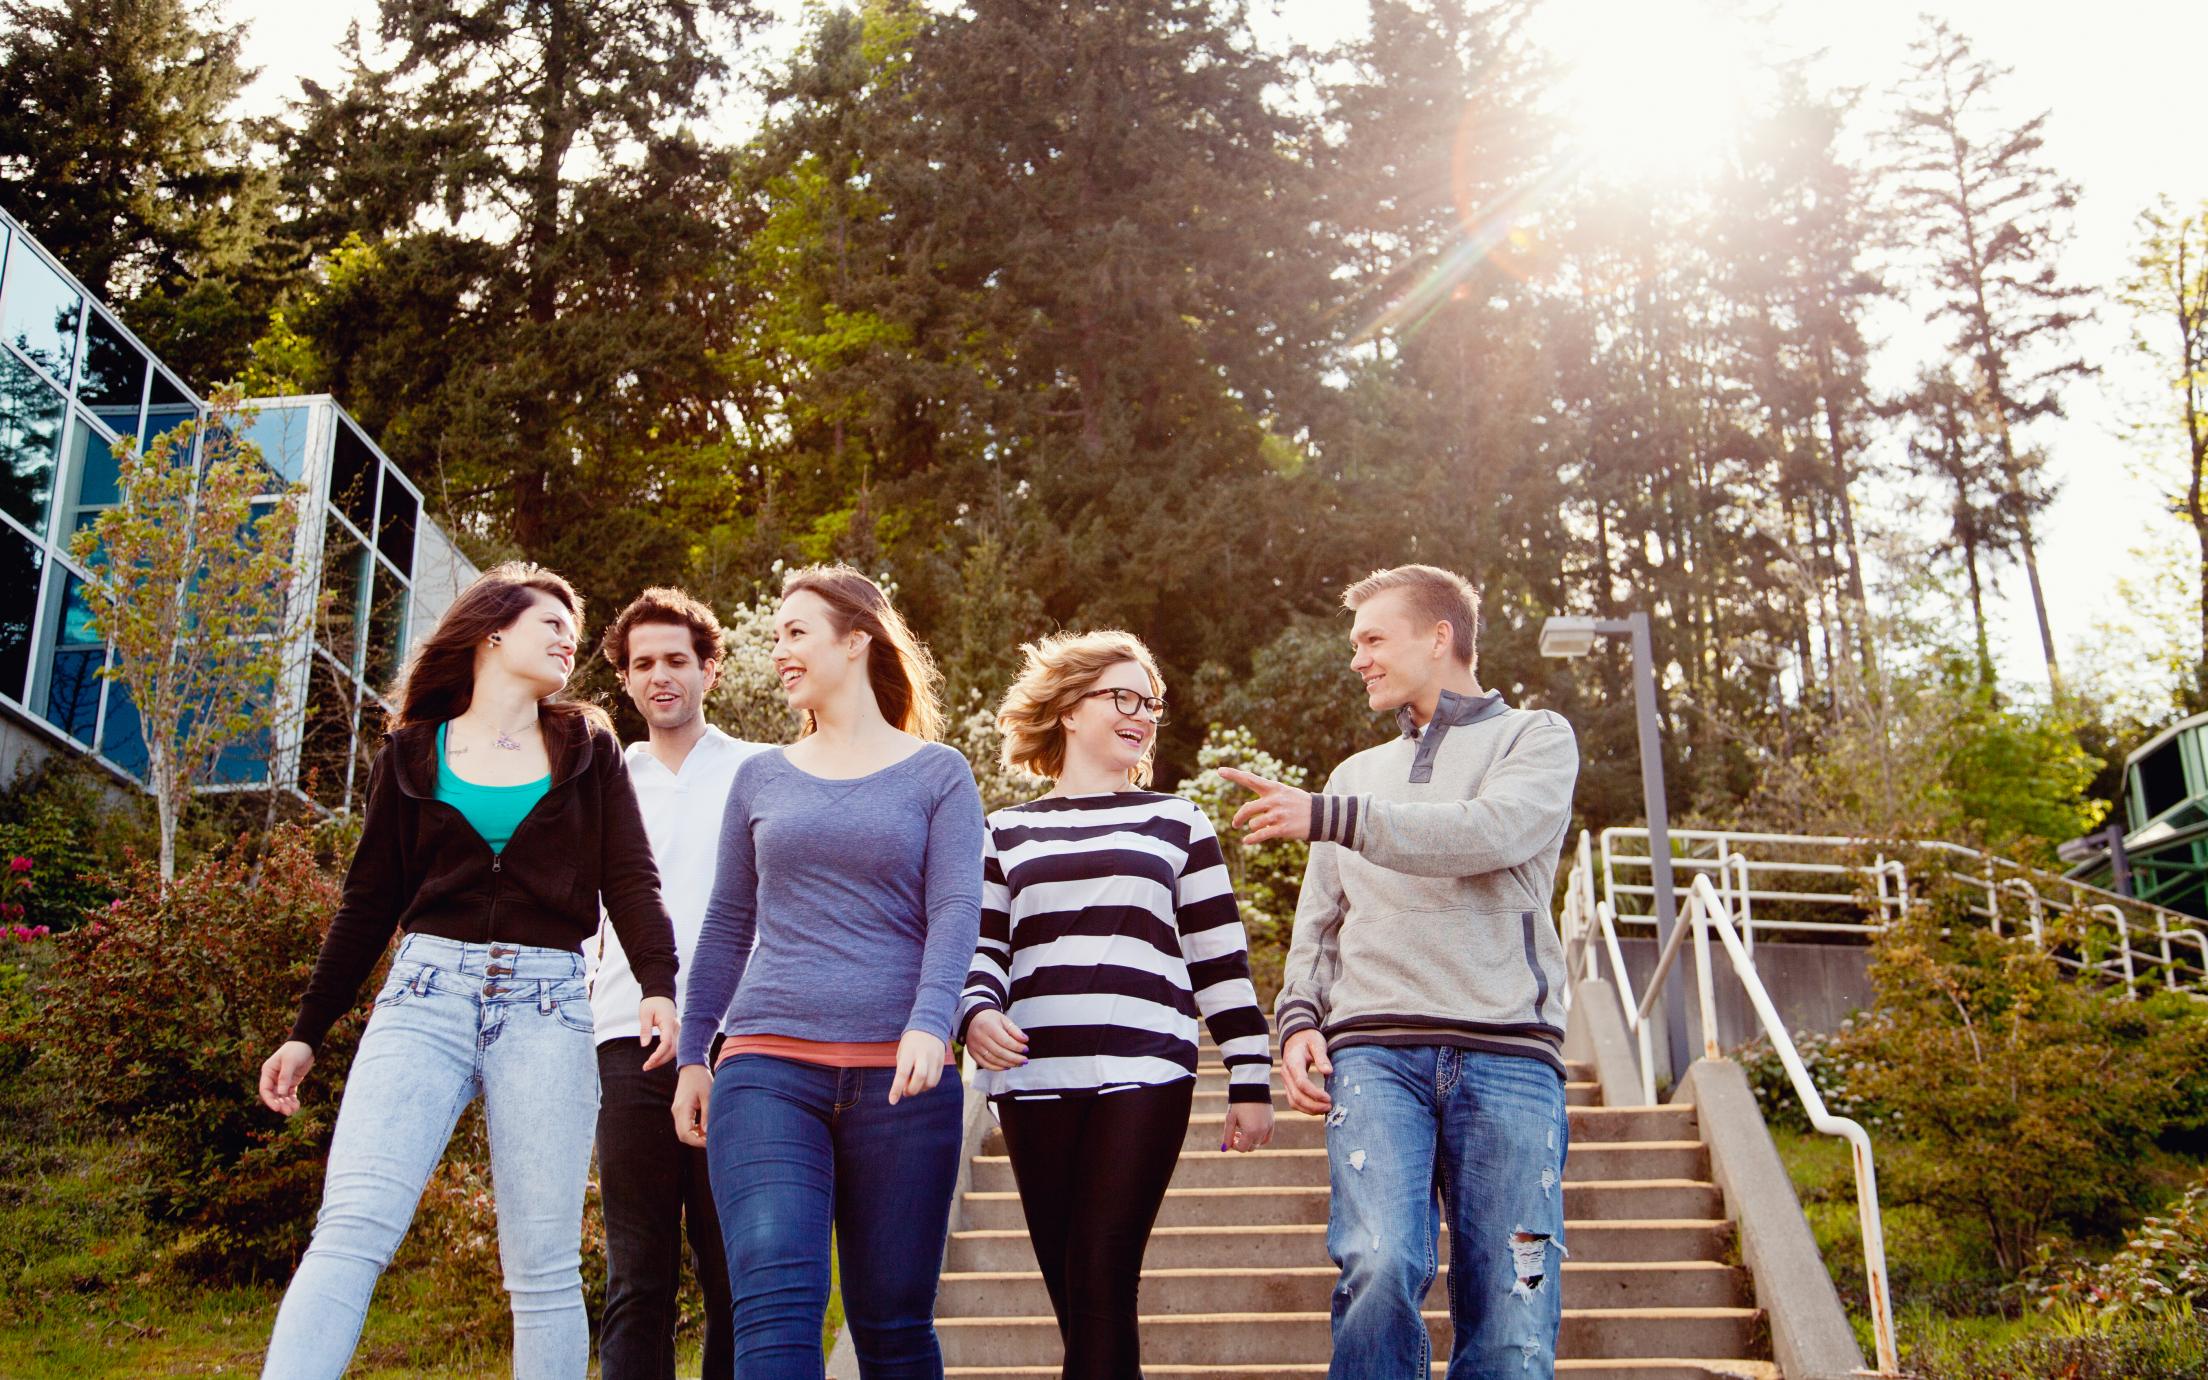 Vancouver Island University Education Students